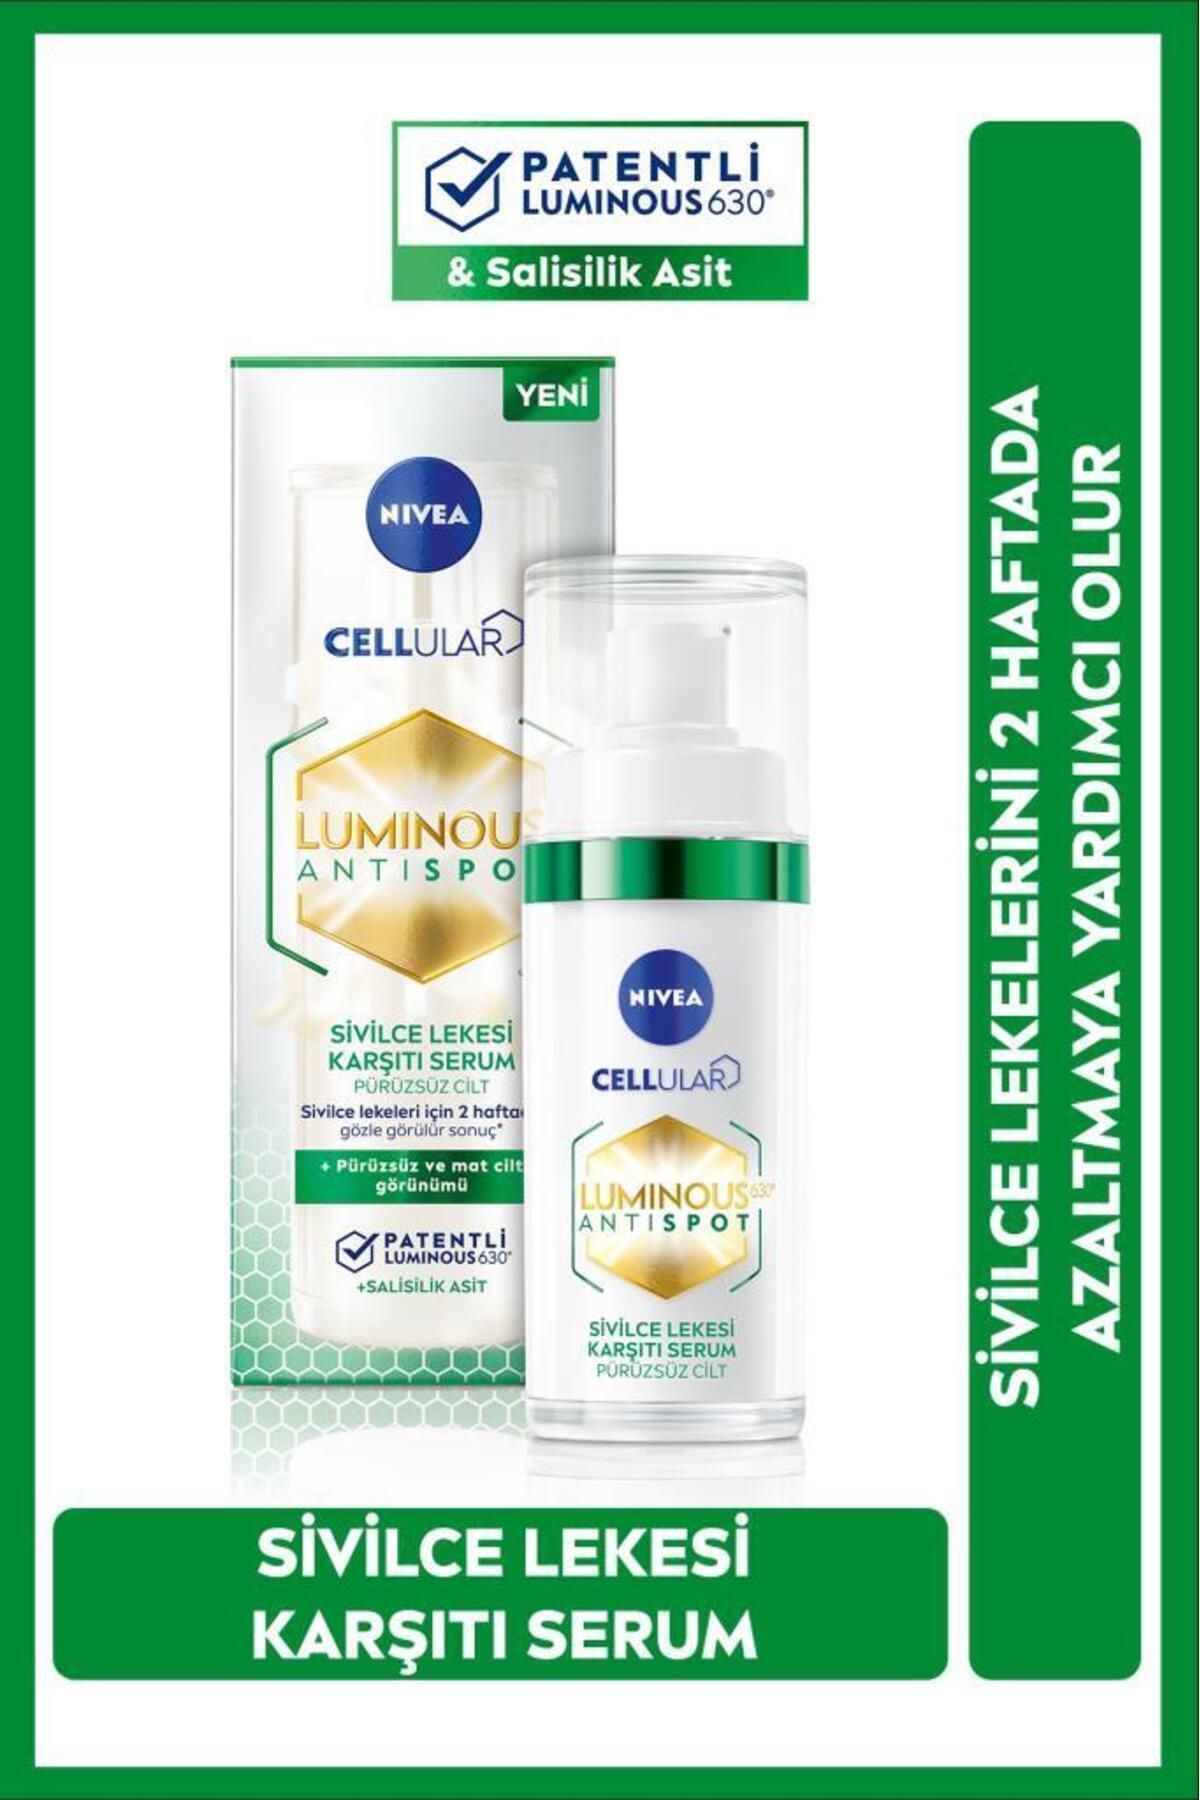 NIVEA Luminous630 Anti-Acne Blemish Serum for Combination and Oily Skin 30 ml Brightt292